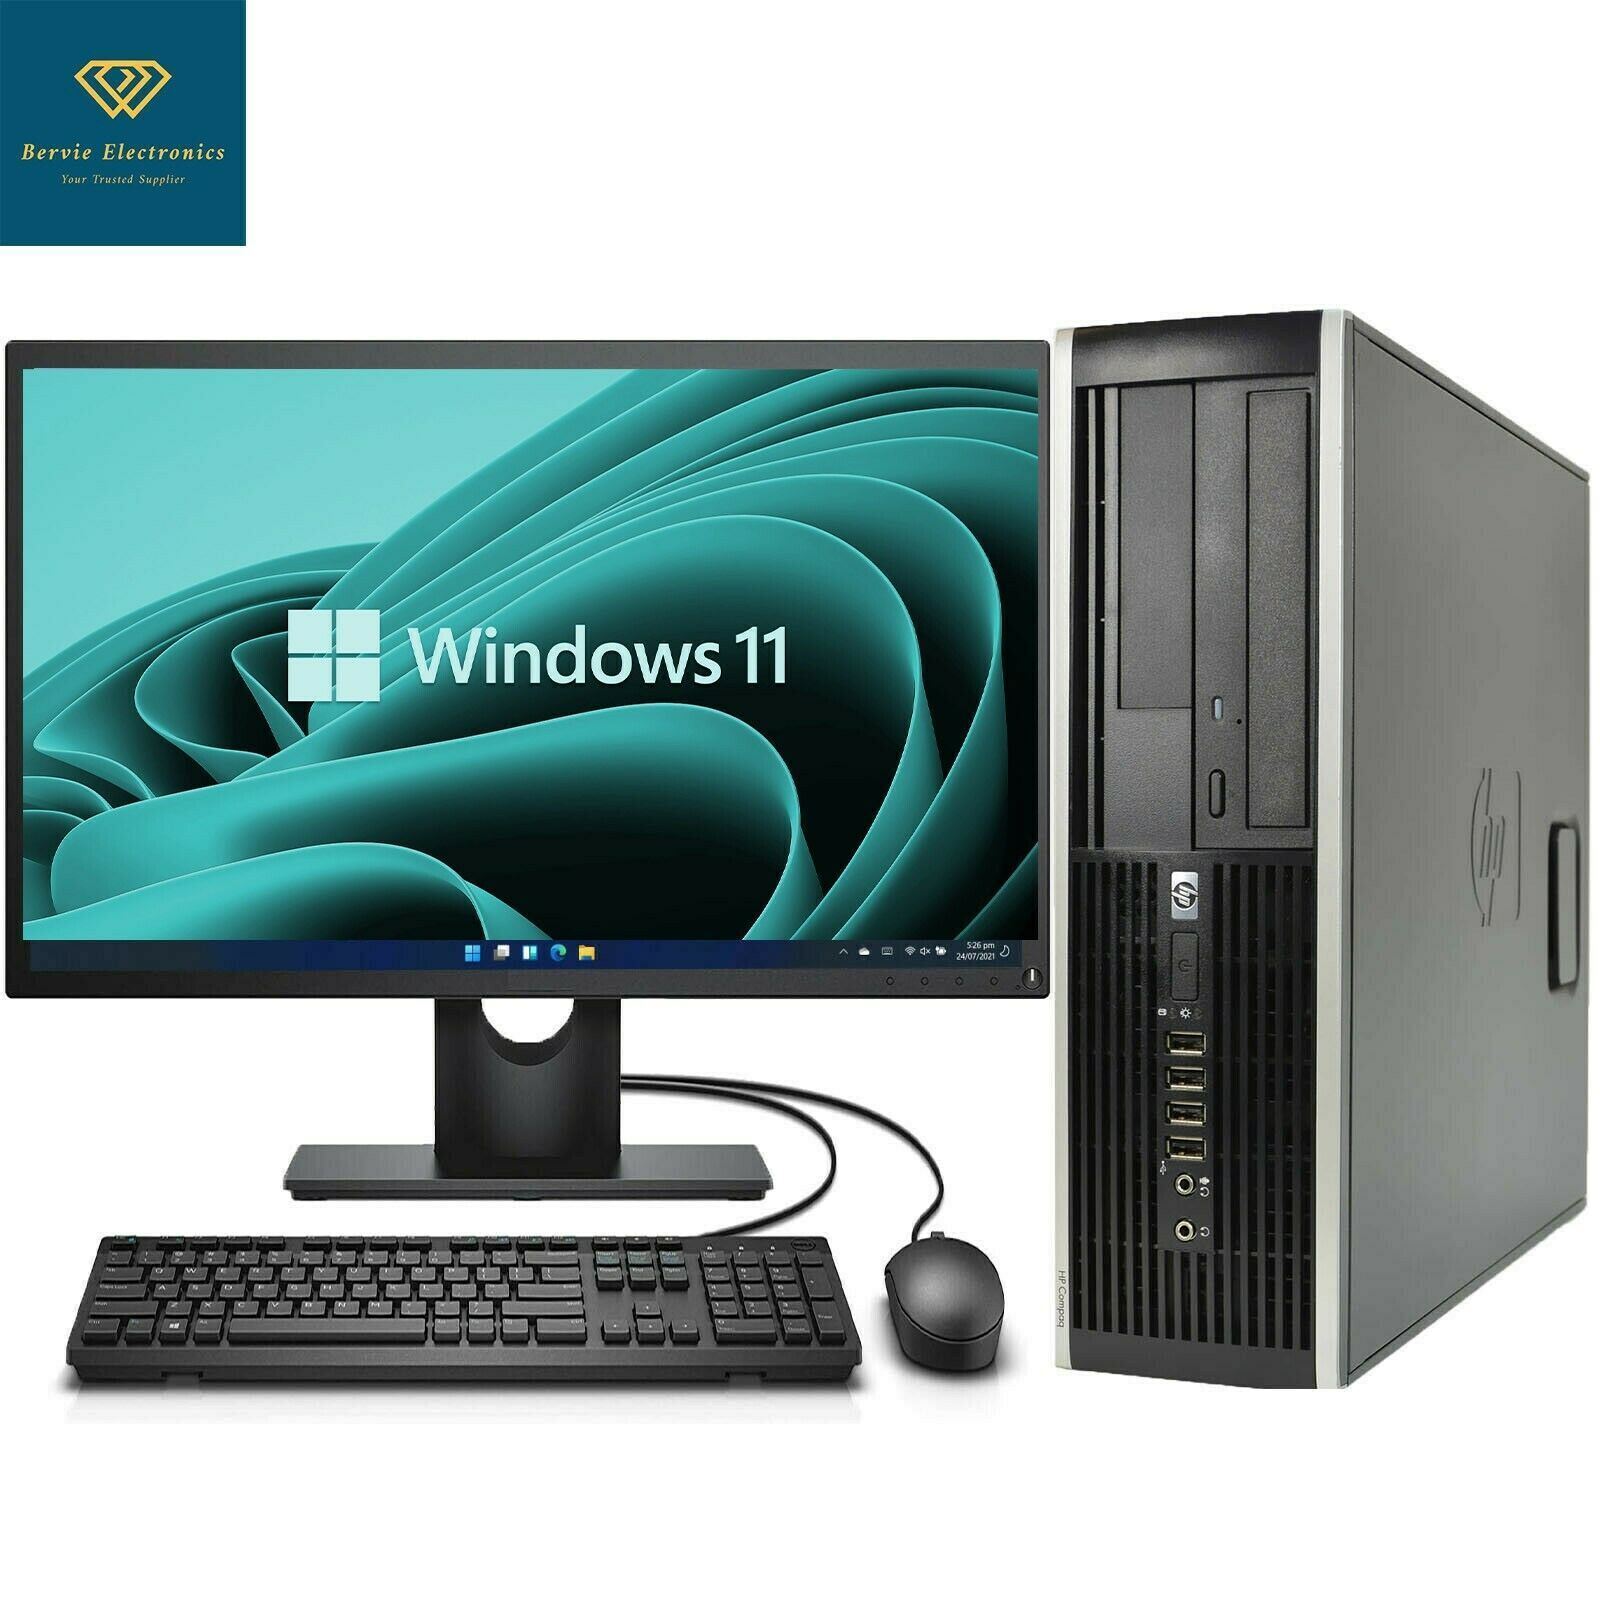 HP 8300 Windows 11 Desktop Computer 1TB HDD 8GB Core i5 WIFI PC 22in MONITOR